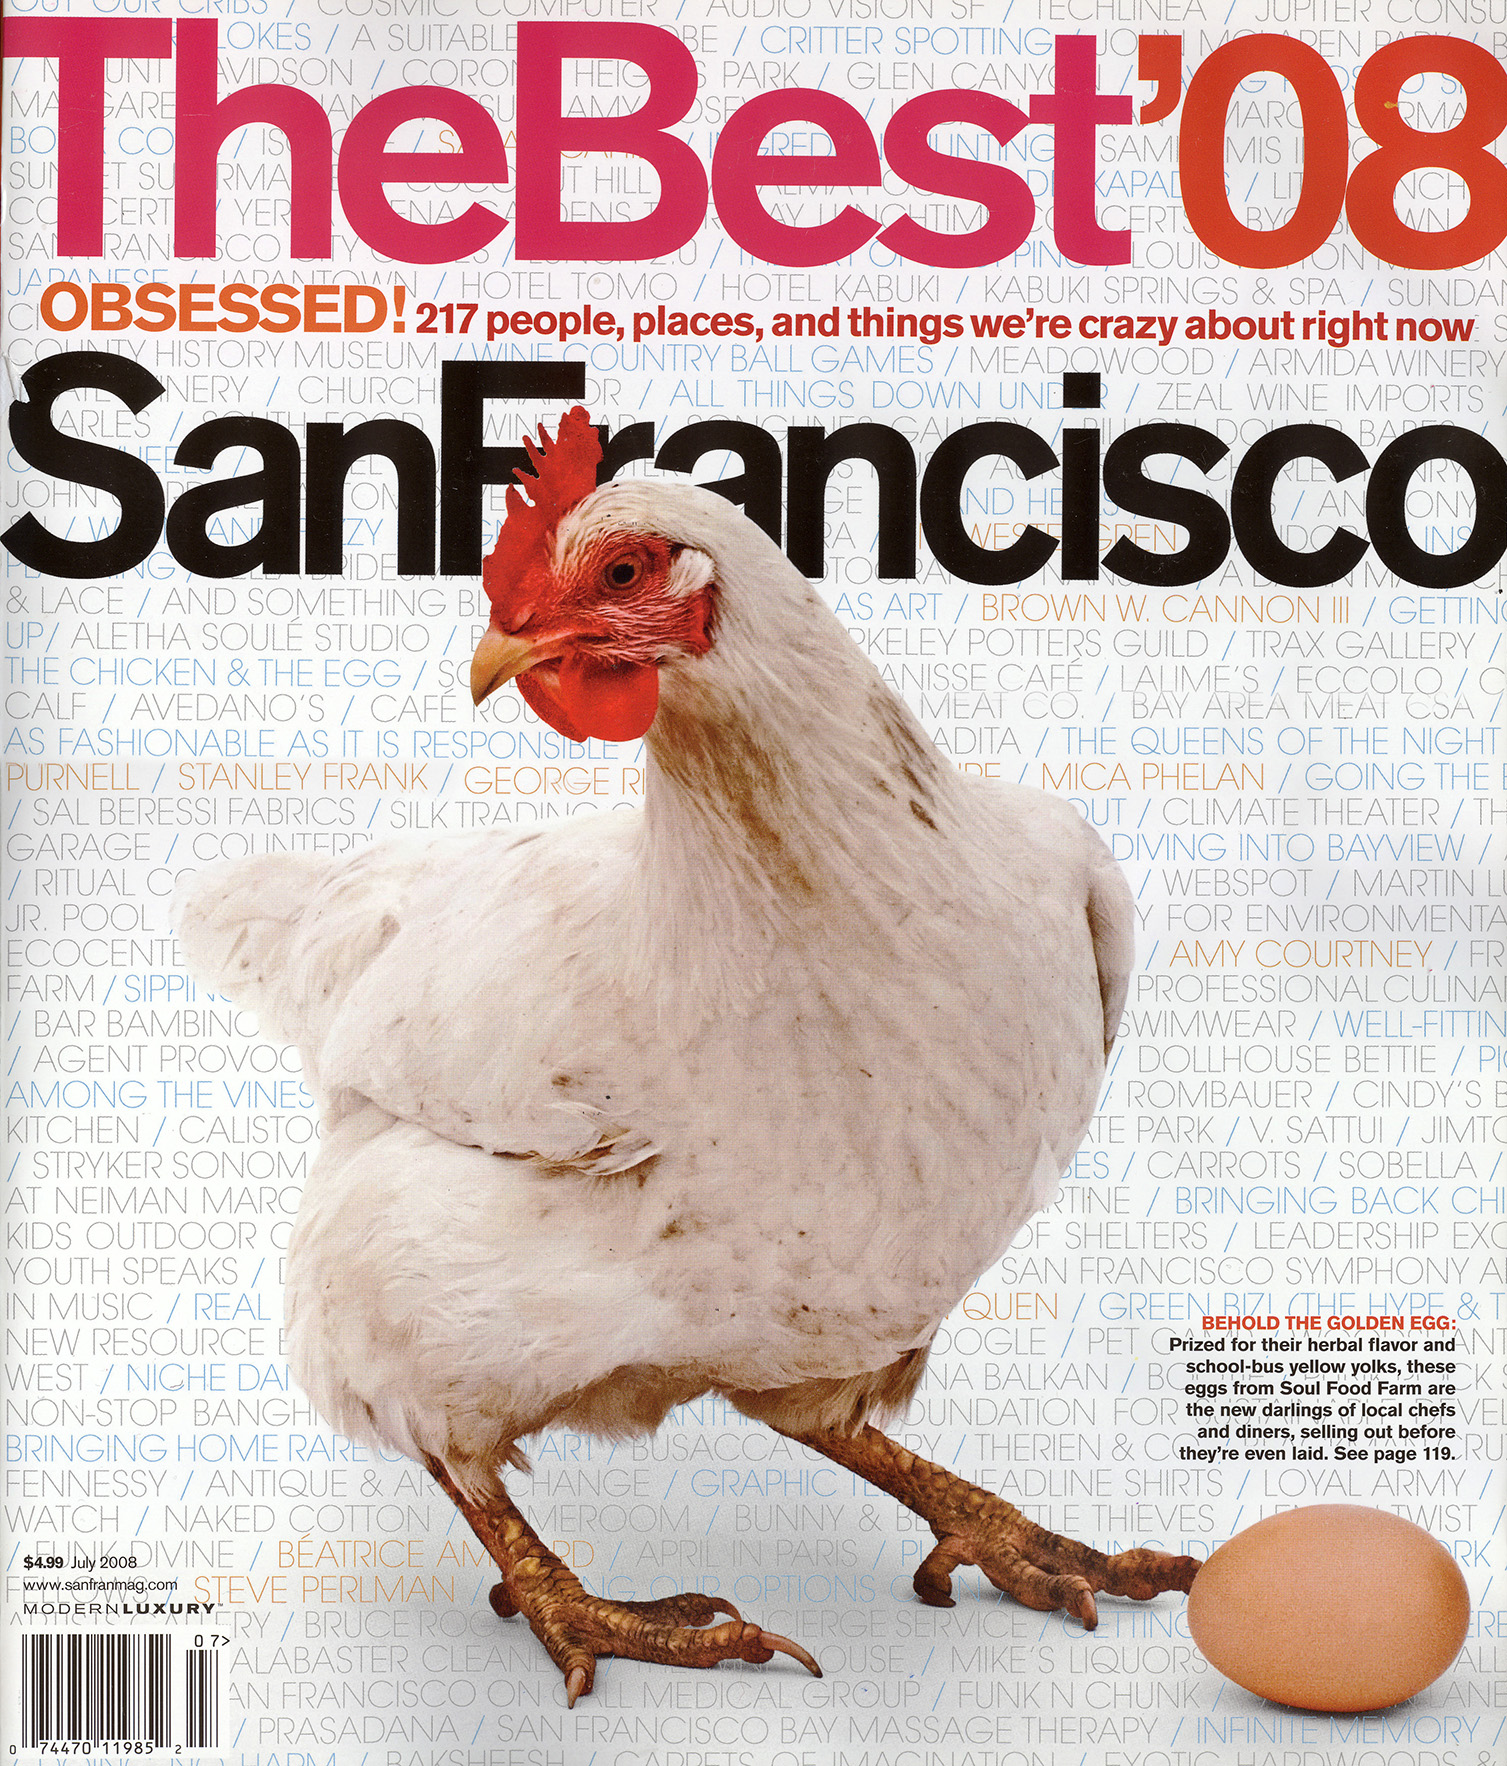 SF magazine July 2008 cover.jpg